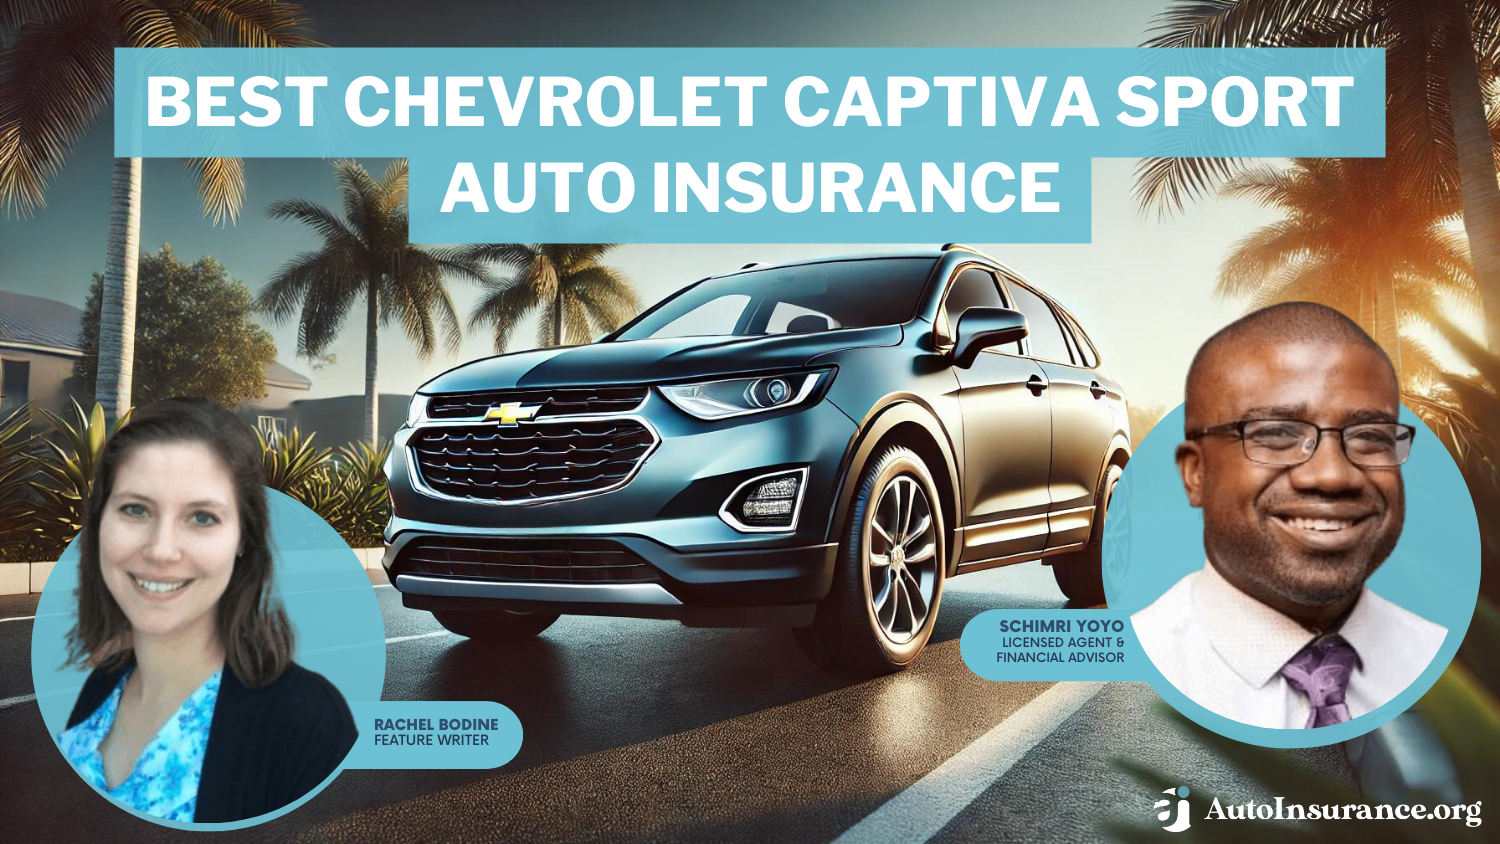 Best Chevrolet Captiva Sport Auto Insurance: State Farm, Geico, Progressive